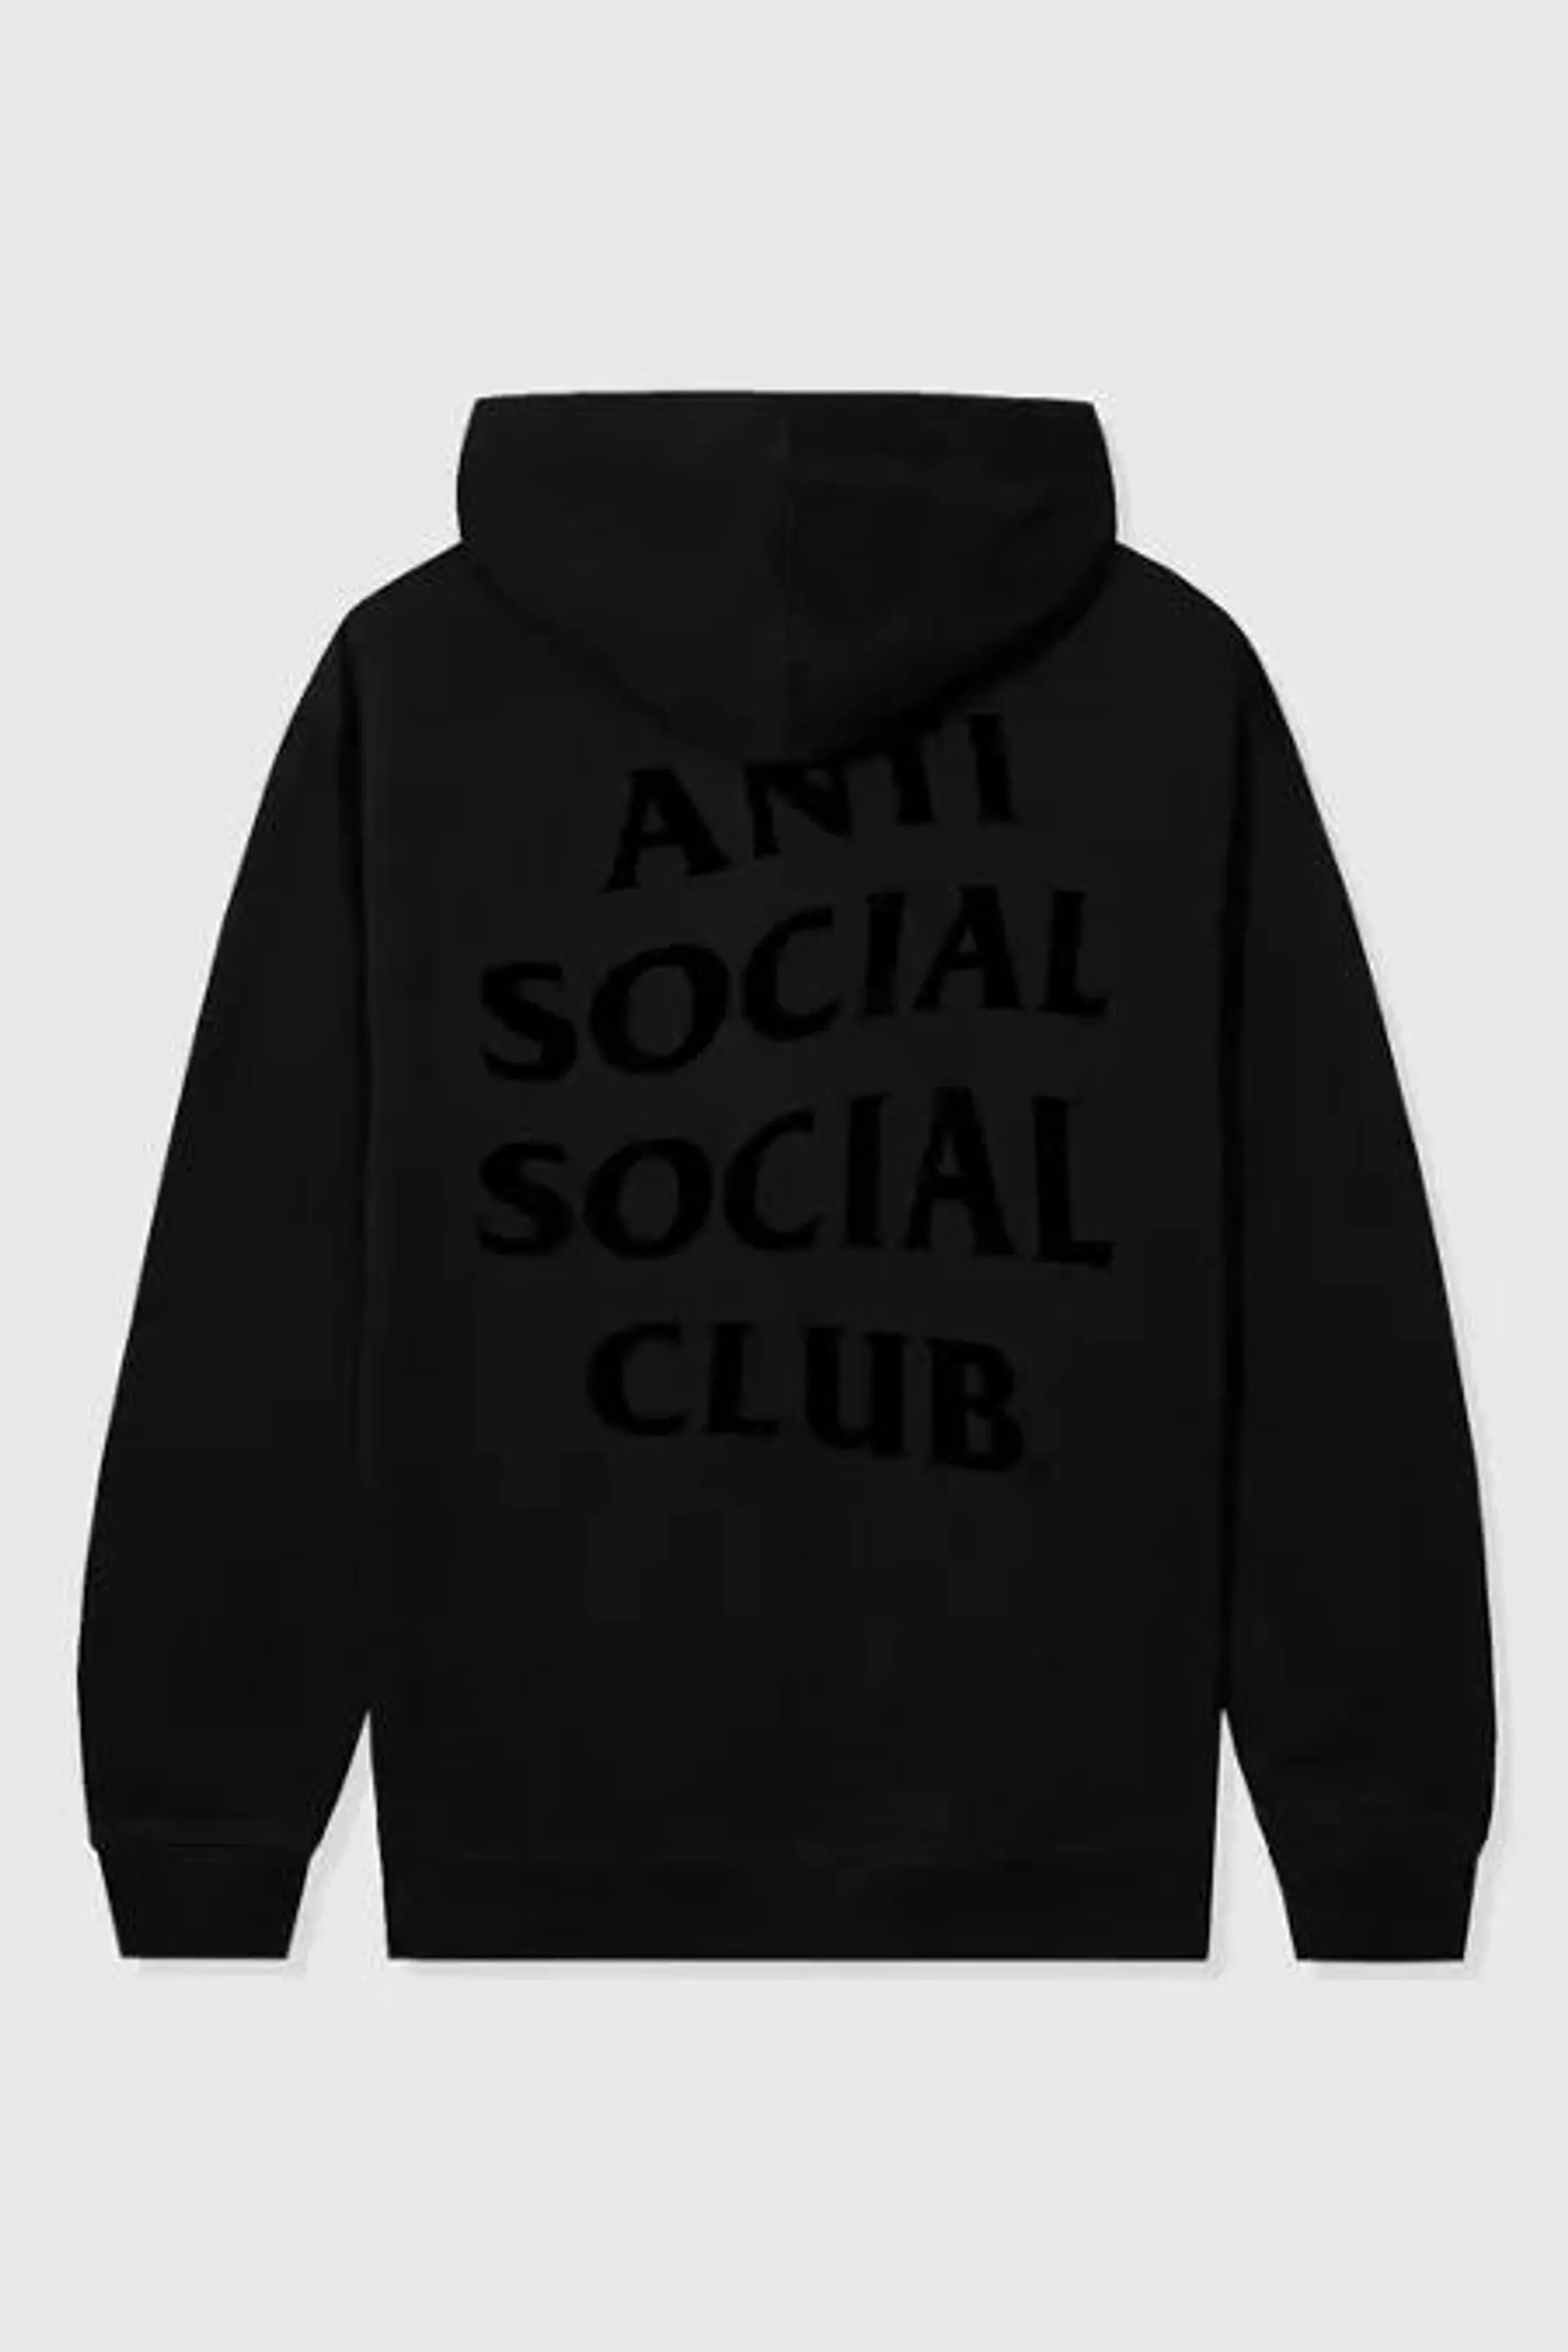 Anti Social Social Club Analogous Hoodie